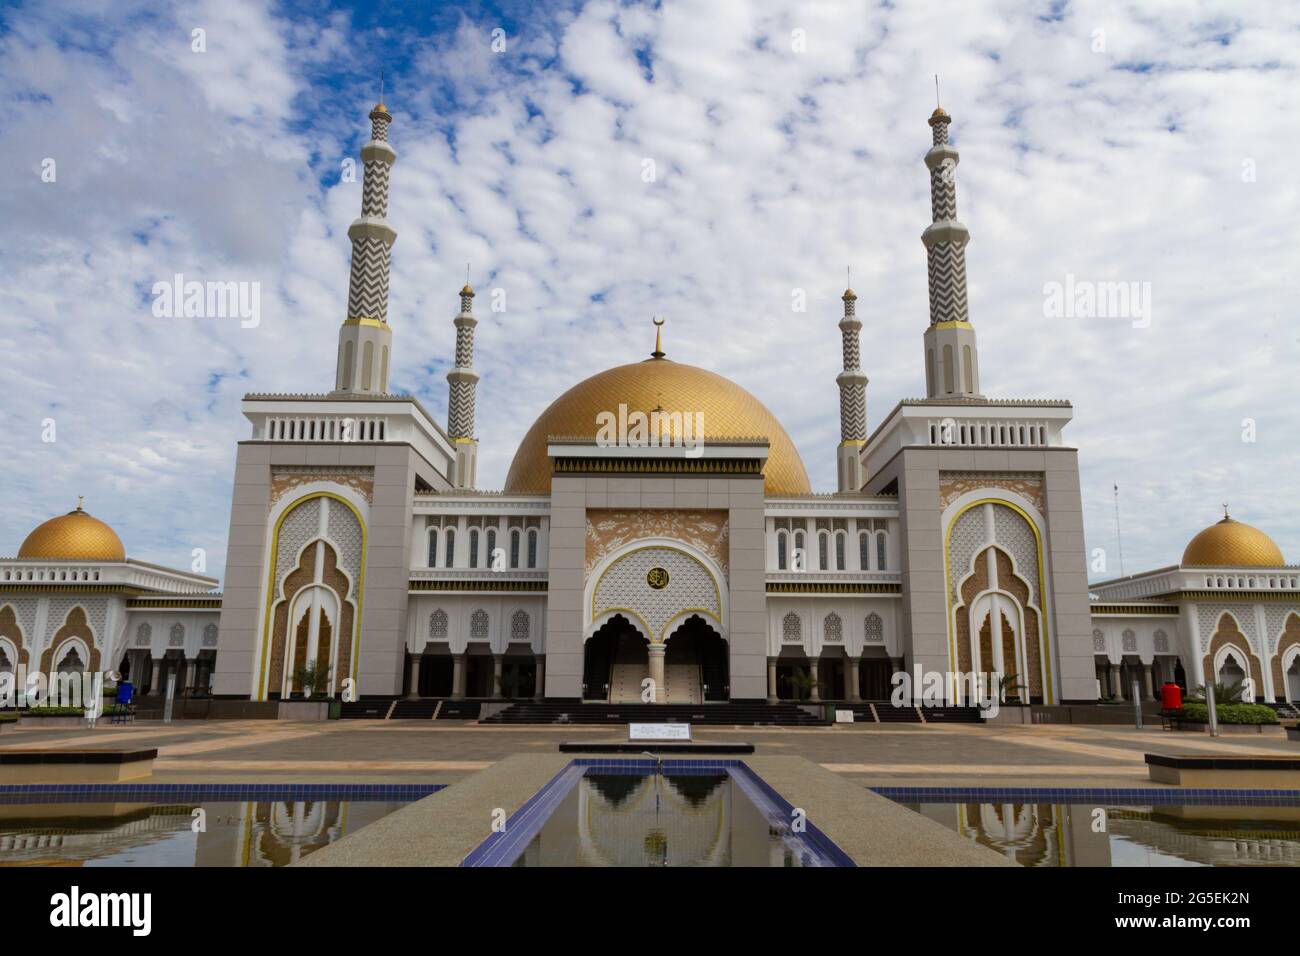 al falah is New Mosque Famous Tourist attraction In Mempawah, Indonesia. Mempawah and west borneo tourism concept Image. Ramadan kareem image. Stock Photo